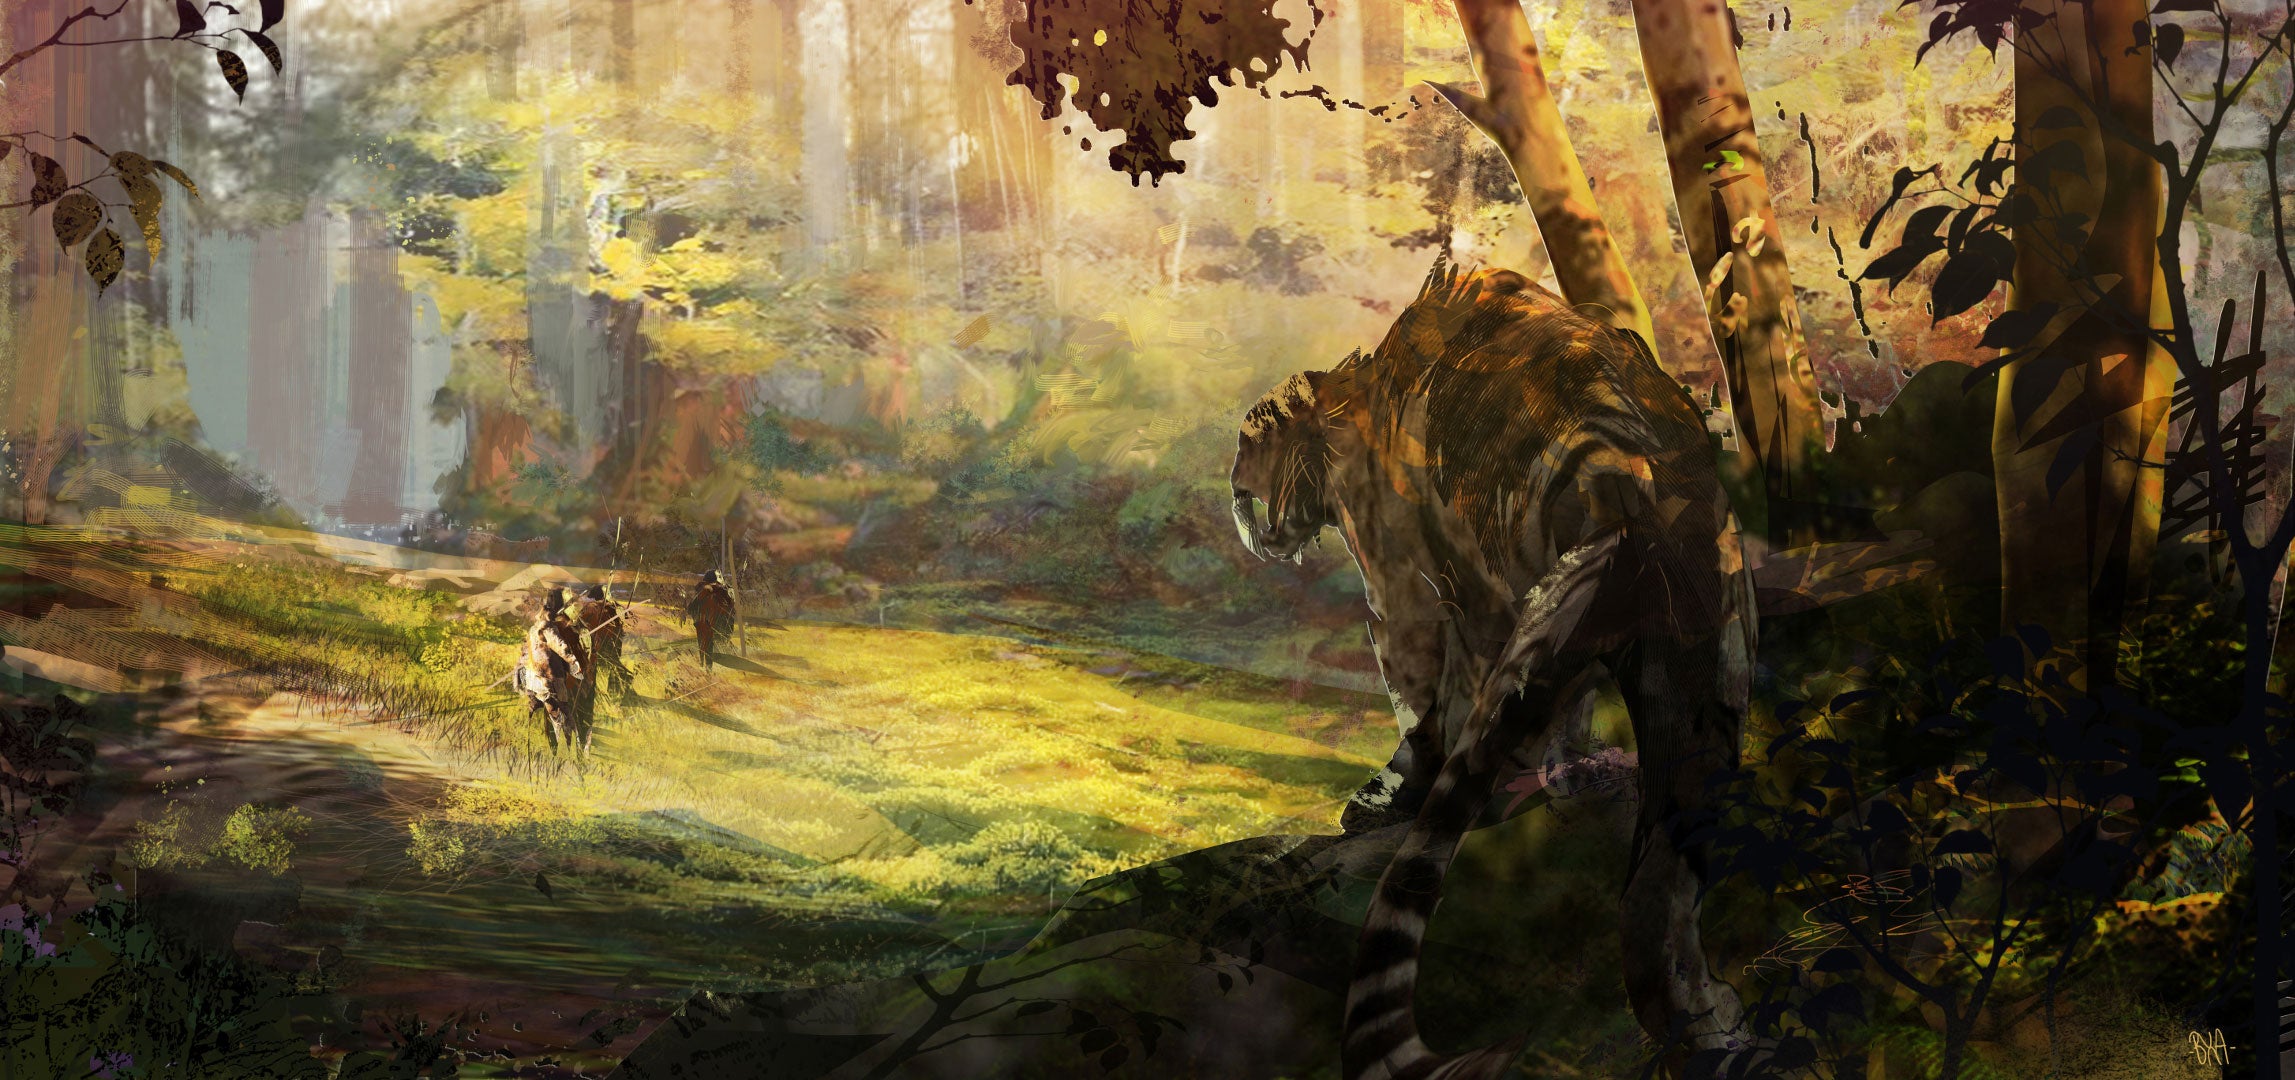 Obrazki dla Far Cry Primal otrzyma tryb Survival